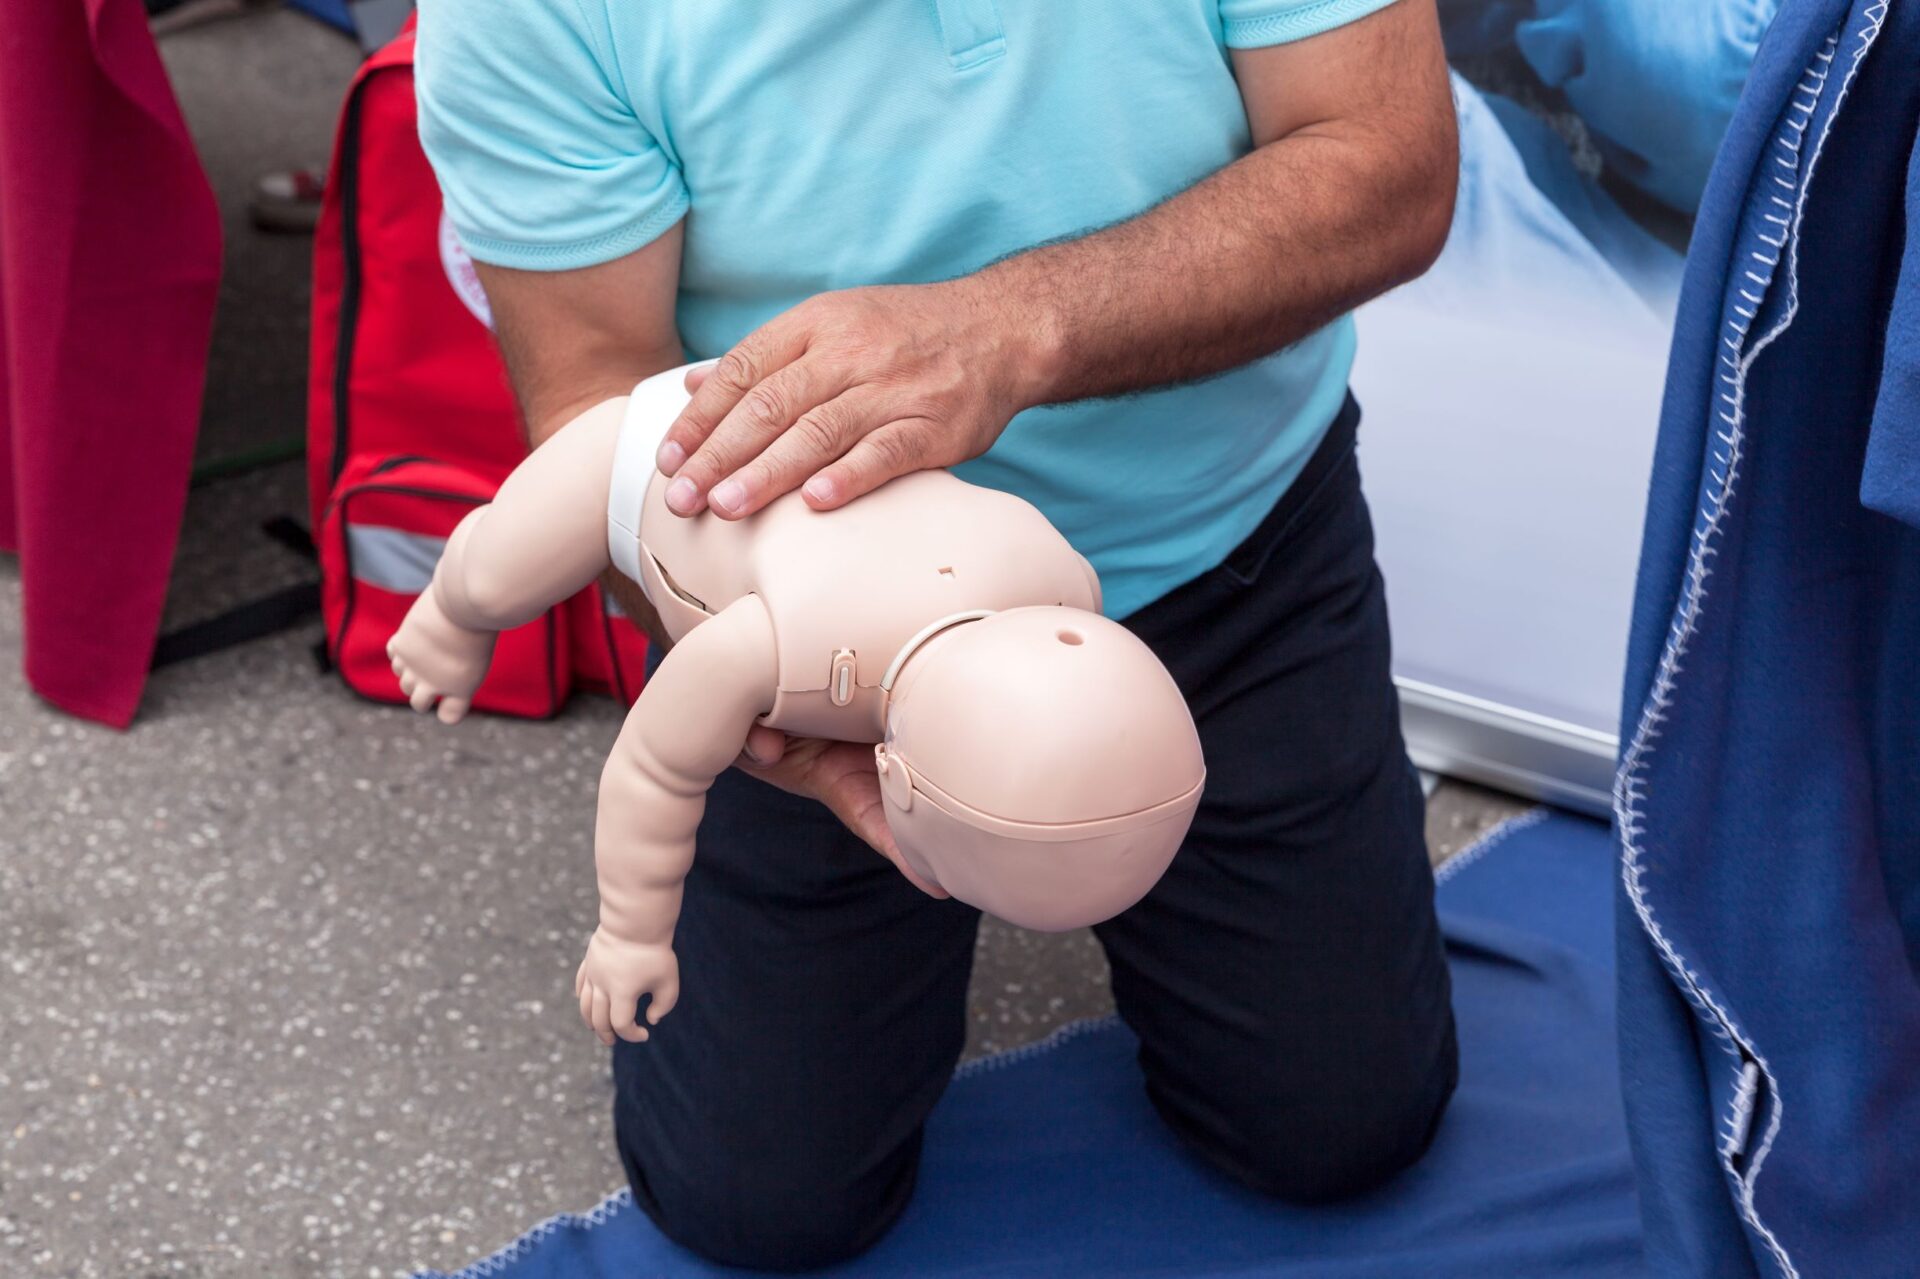 choking instruction on baby doll